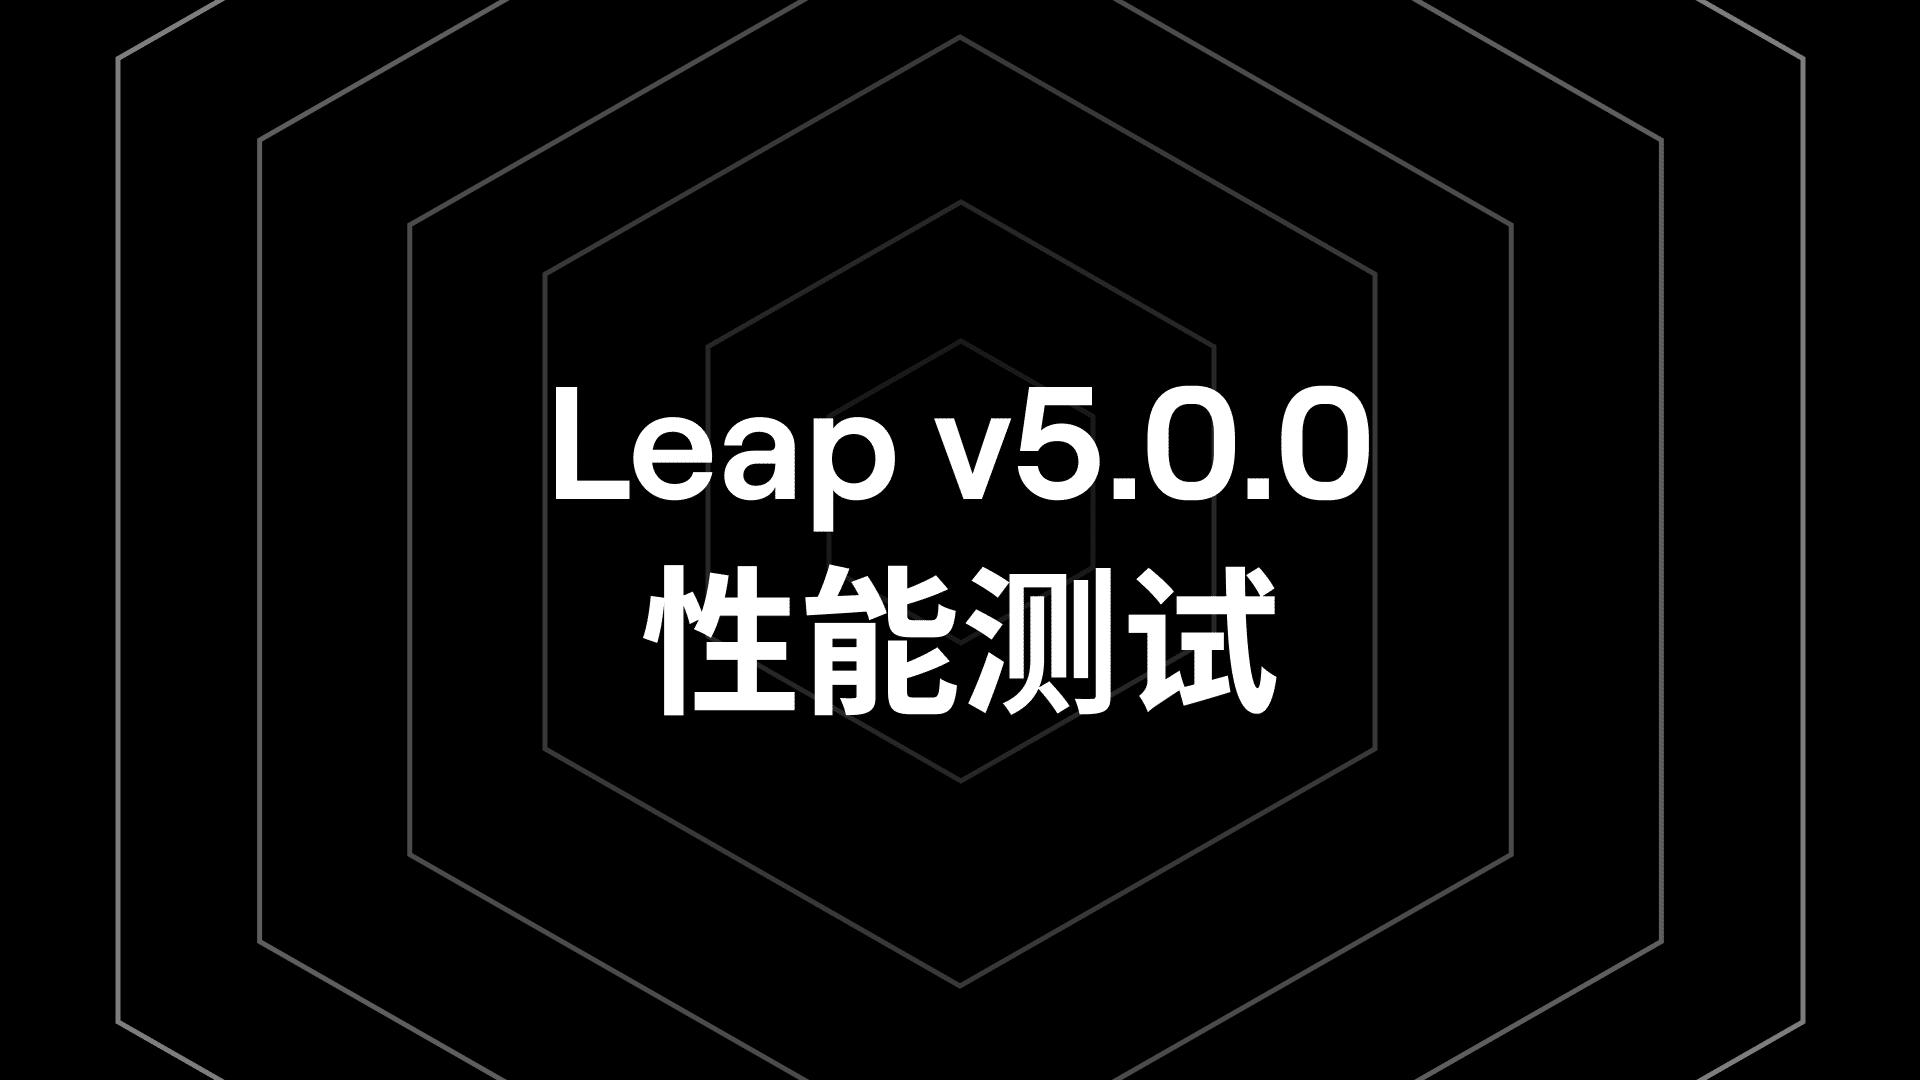 Leap v5.0.0 性能测试